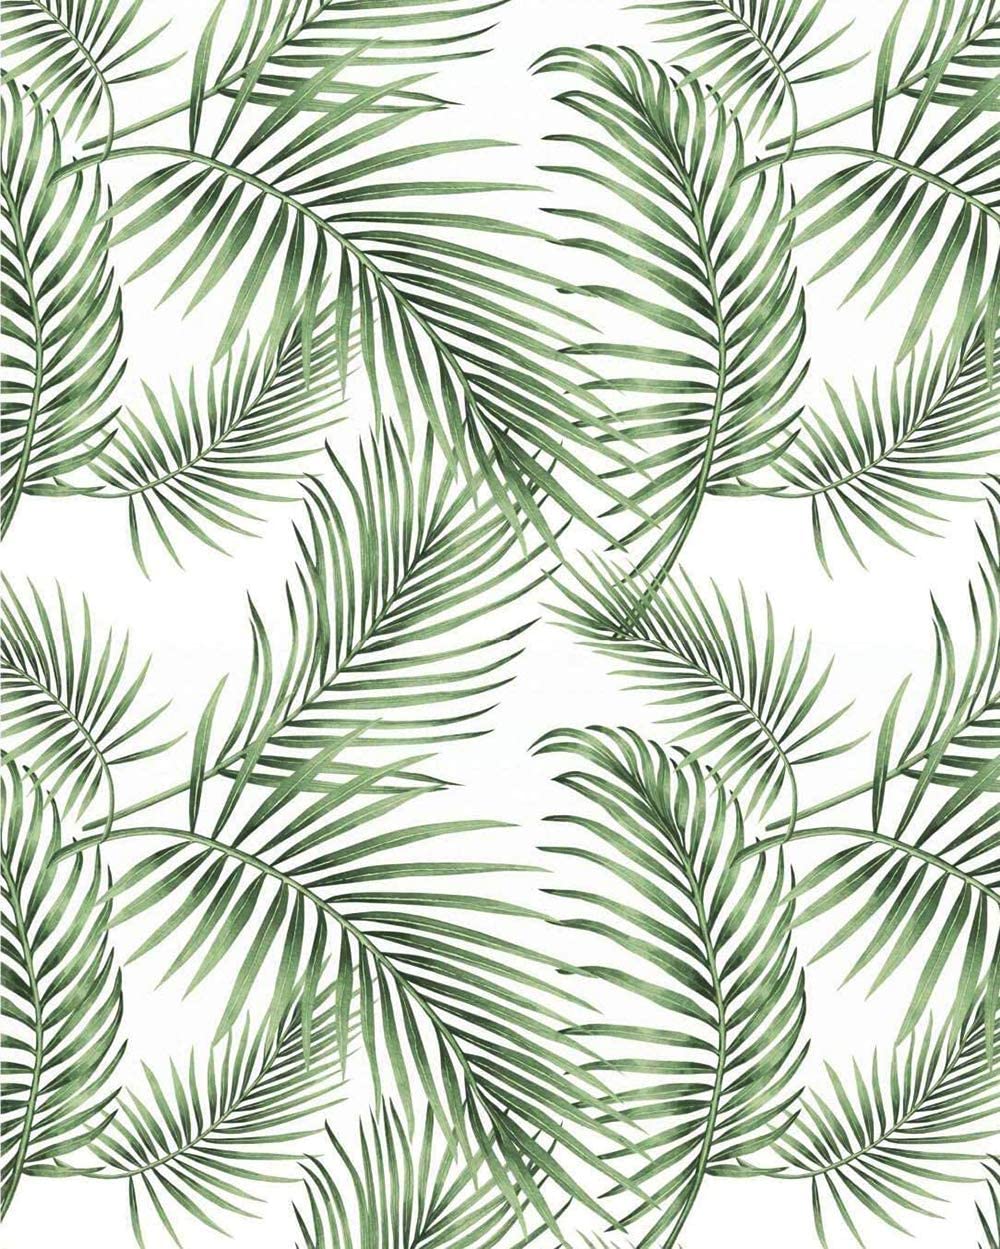 Rasch Portfolio Jungle Leaves Green Wallpaper 214628 Large Tropical Palm Trees 